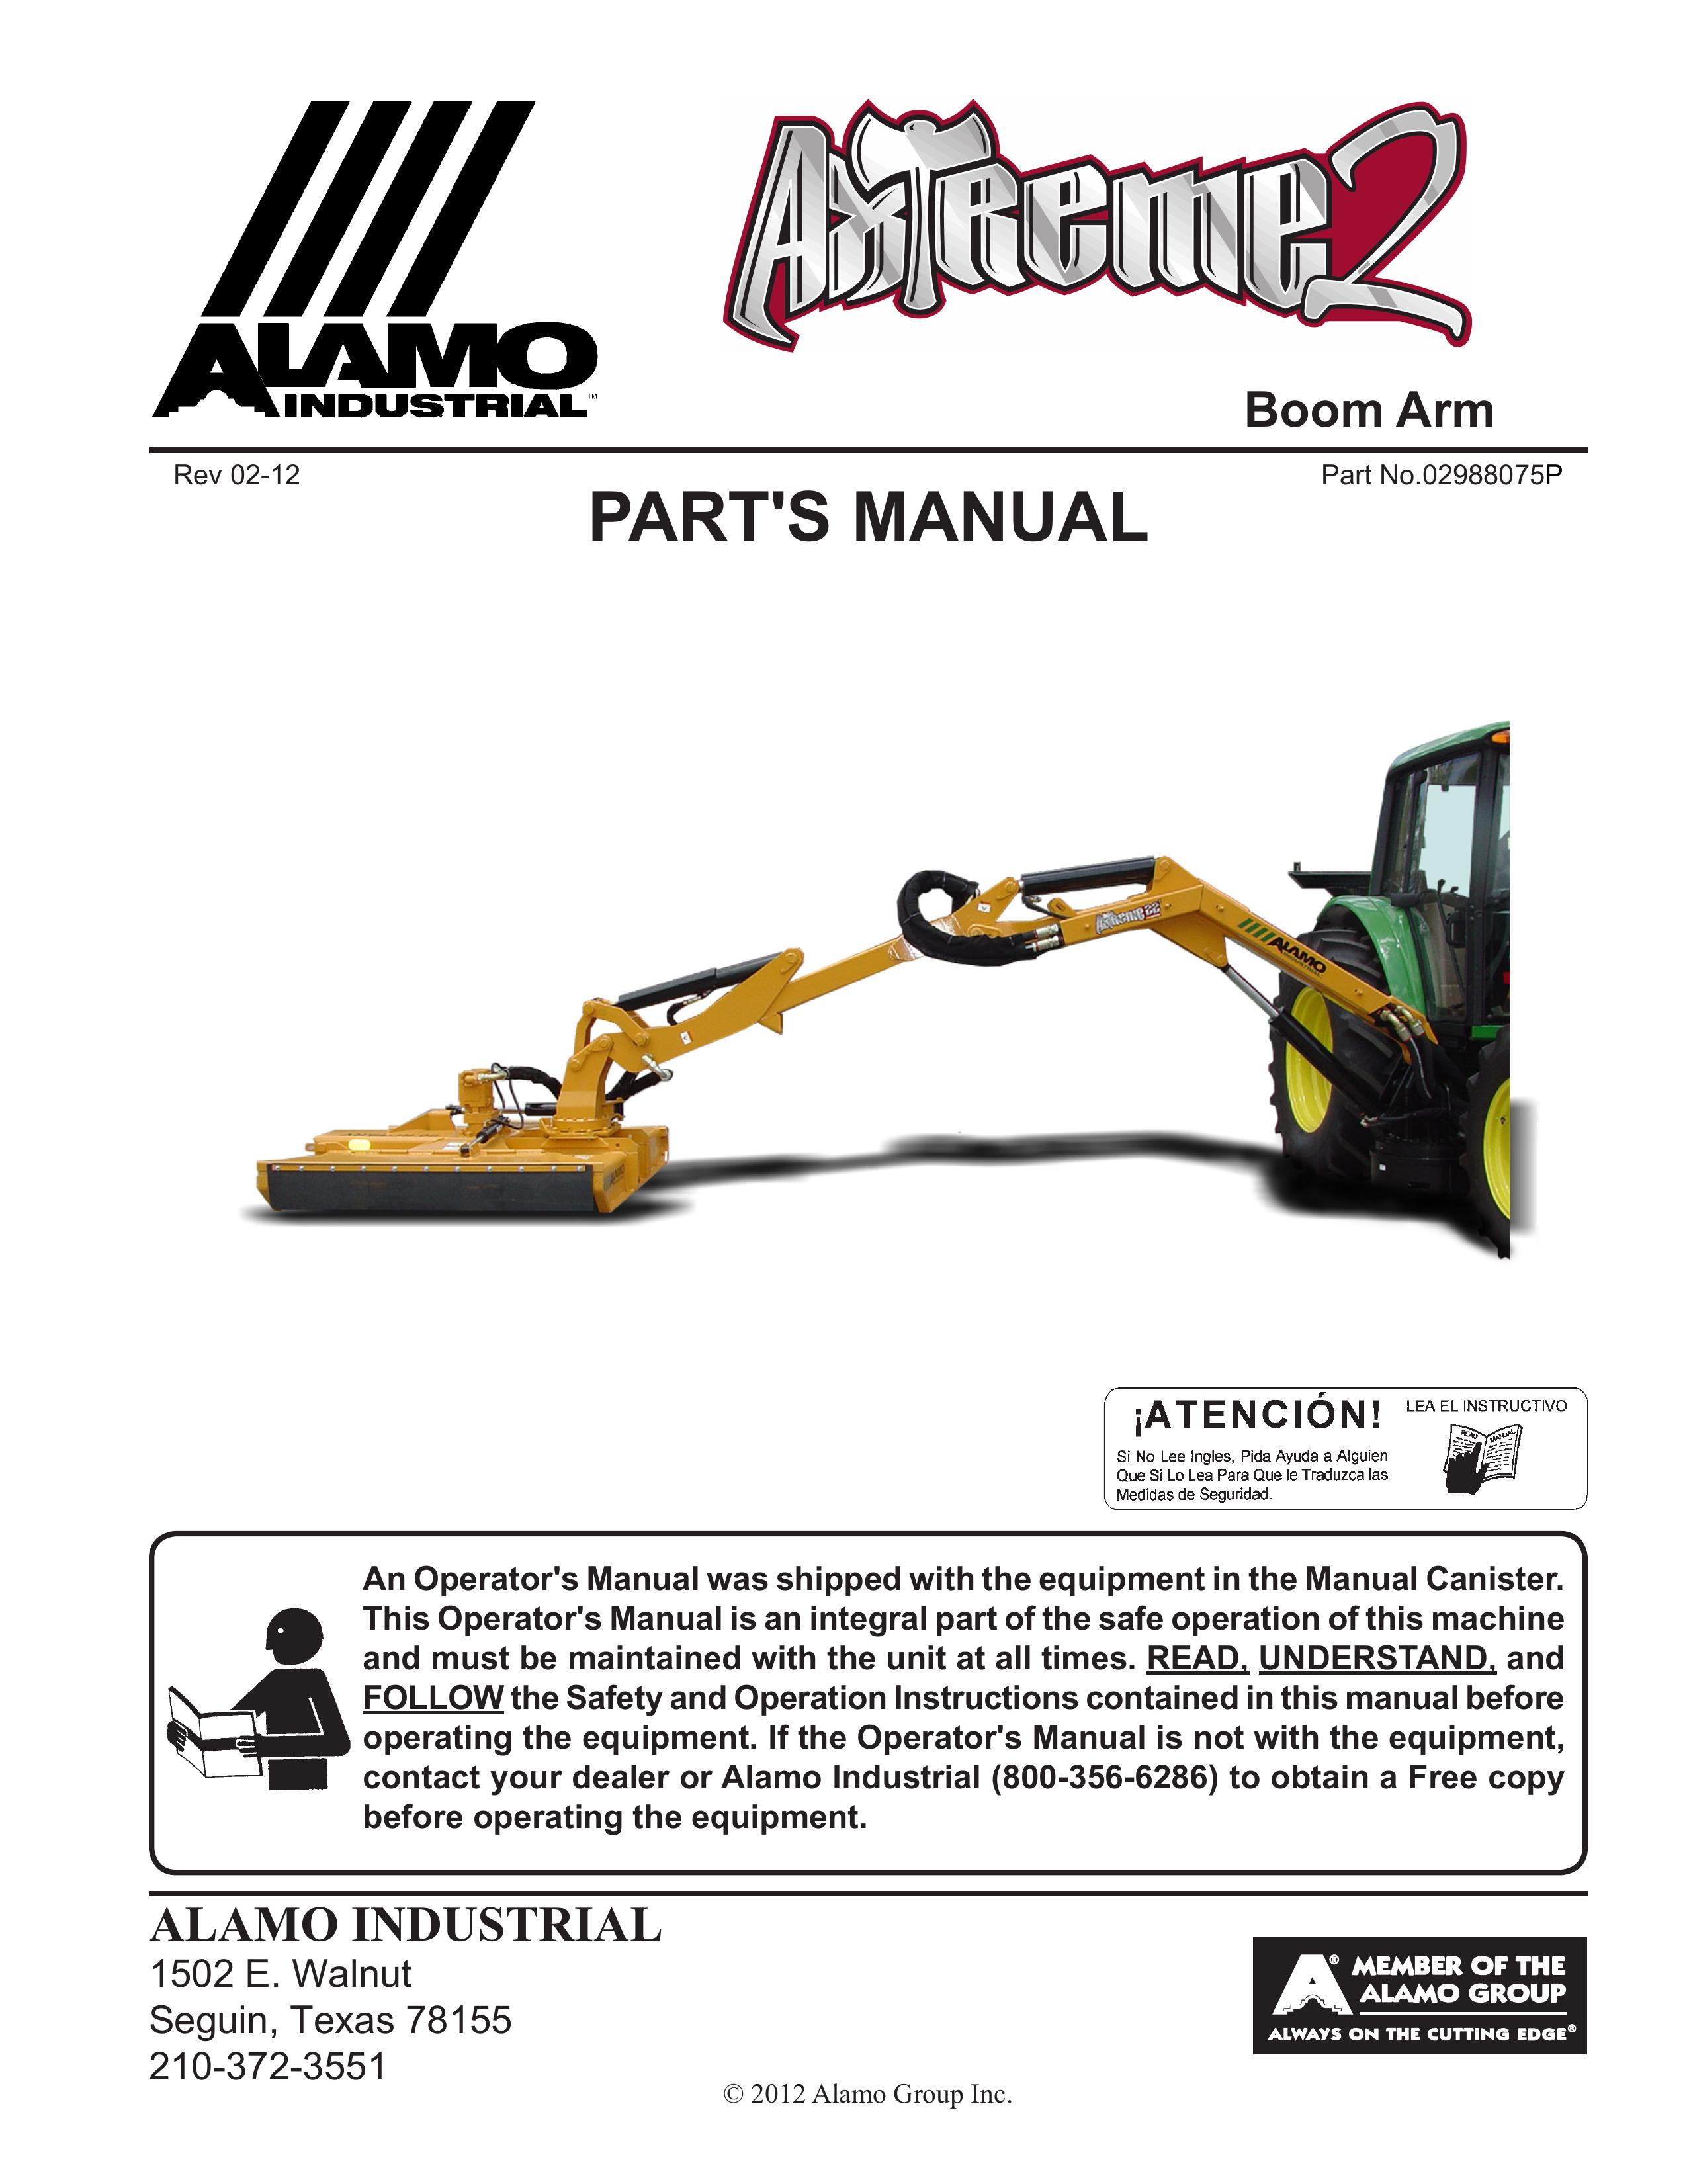 Alamo 02988075P Lawn Mower User Manual